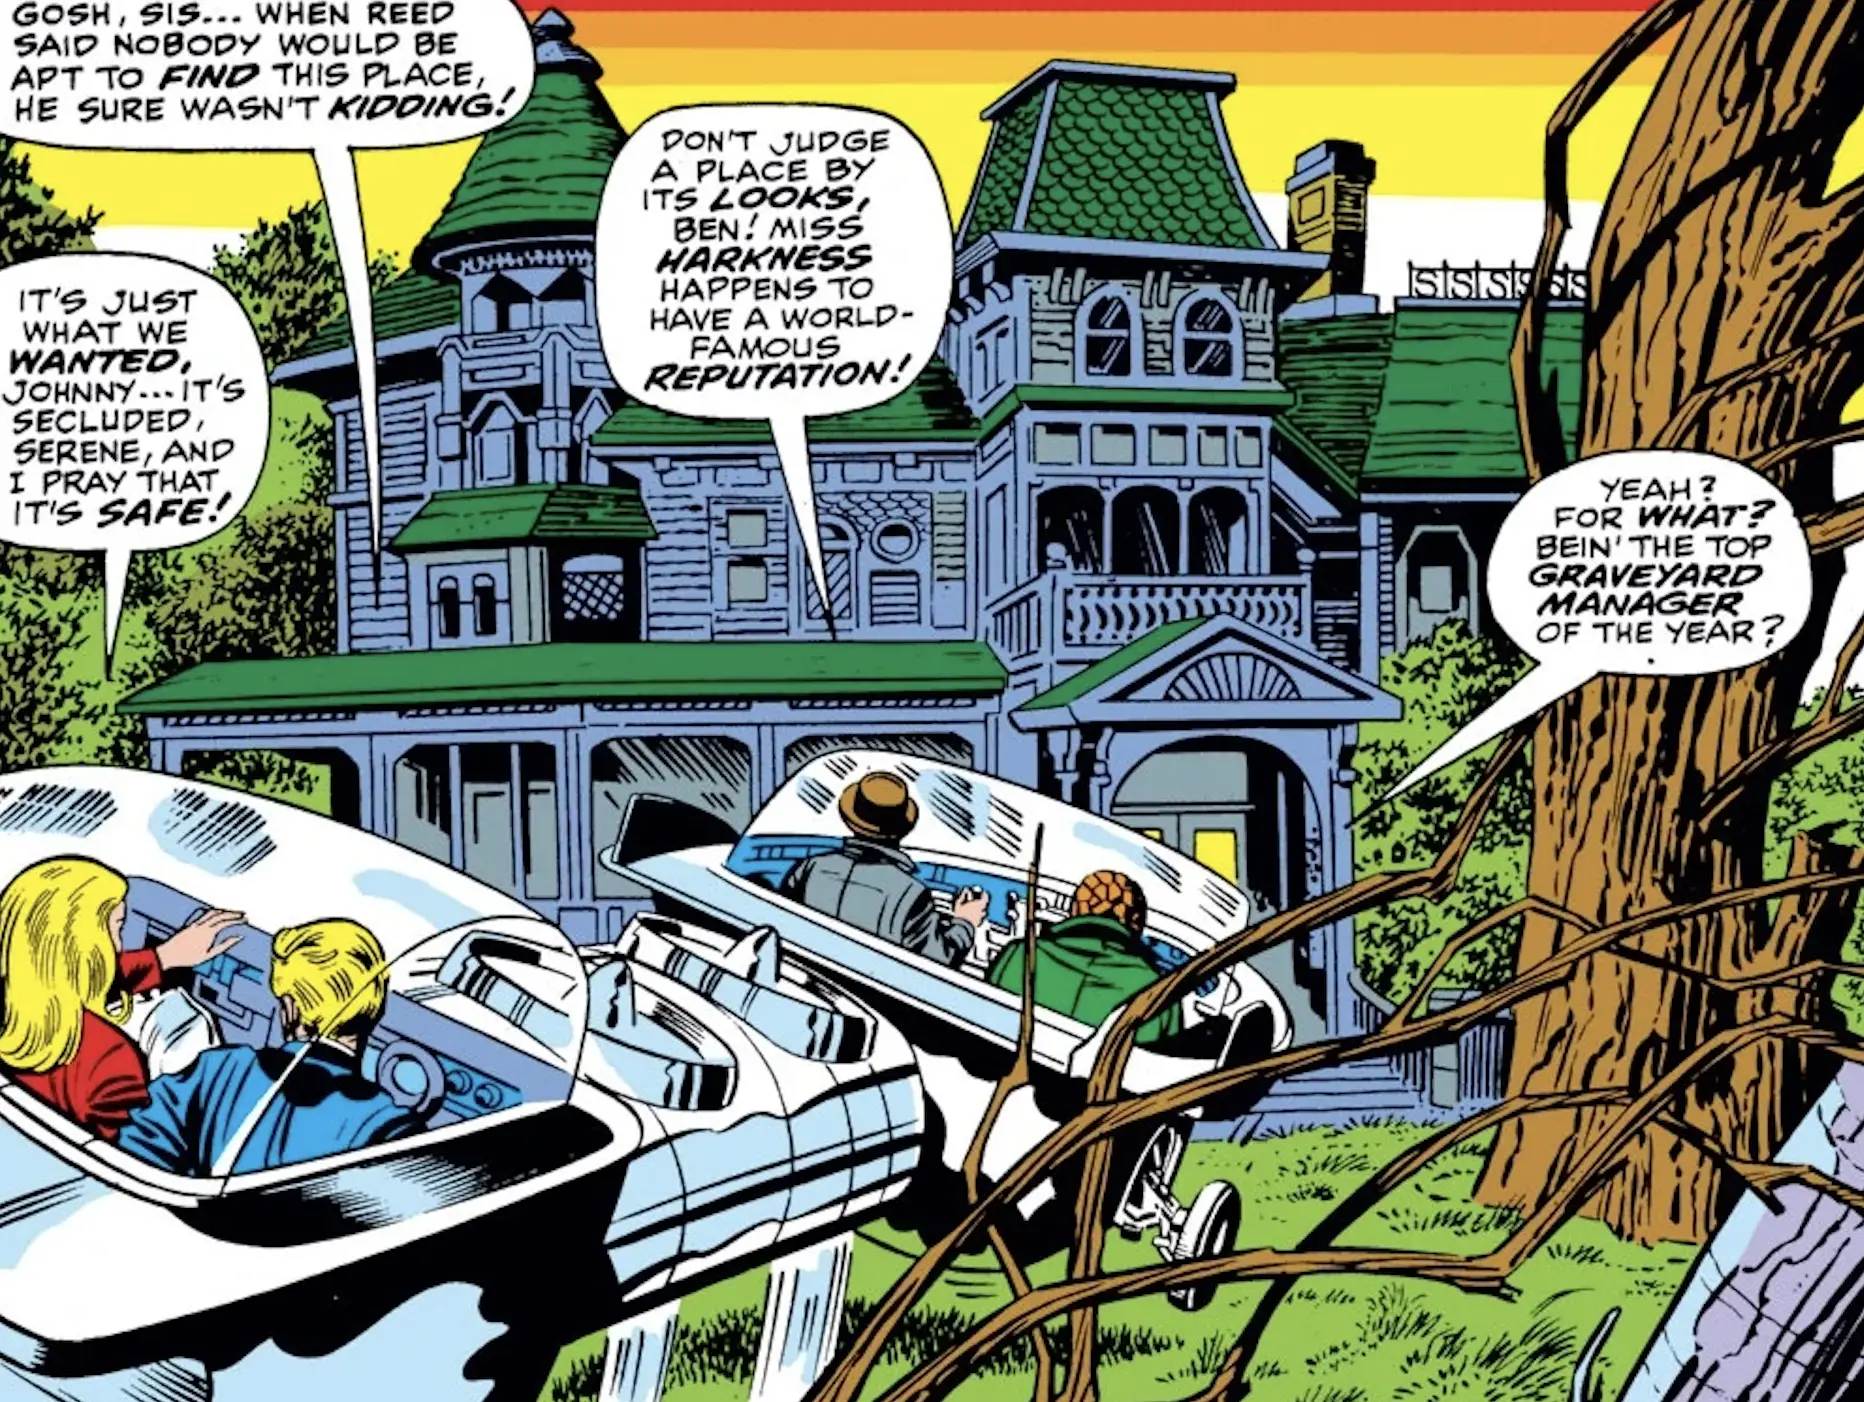 Whisper Hill from Fantastic Four #110 by Stan Lee, John Buscema, Joe Sinnott, and M. Stevens.